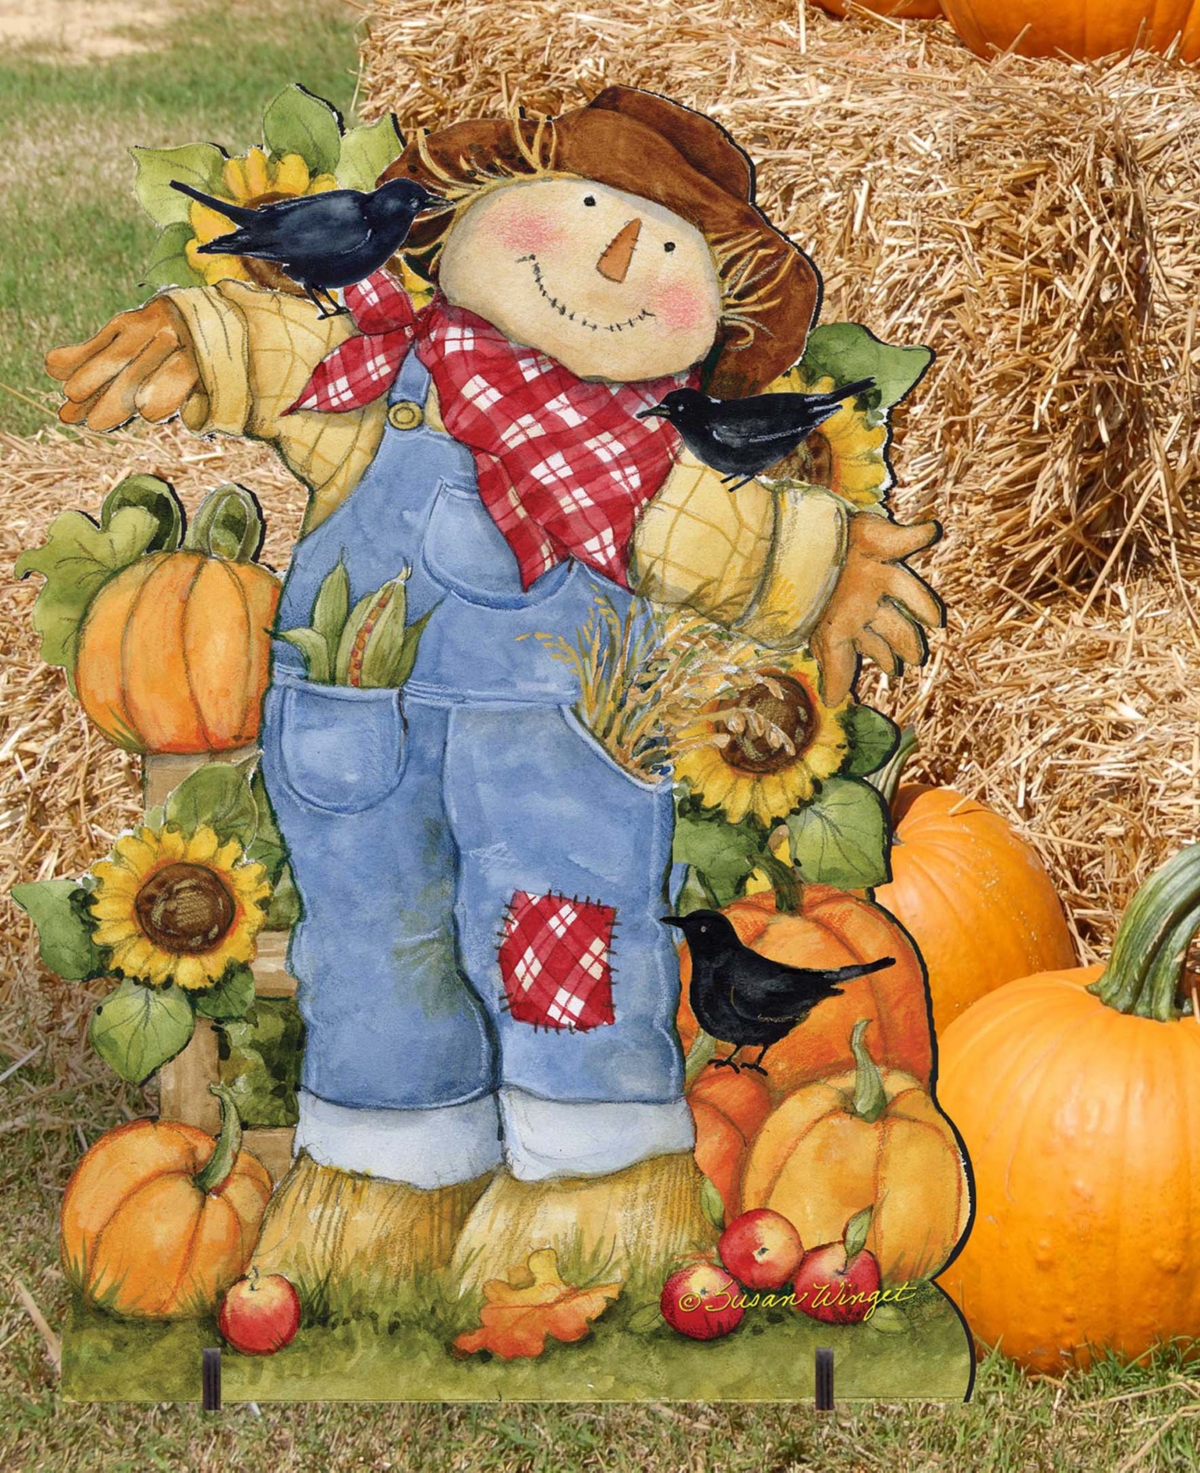 Designocracy Outdoor Holiday Free Standing Garden Decor Scarecrow S. Winget In Multi Color